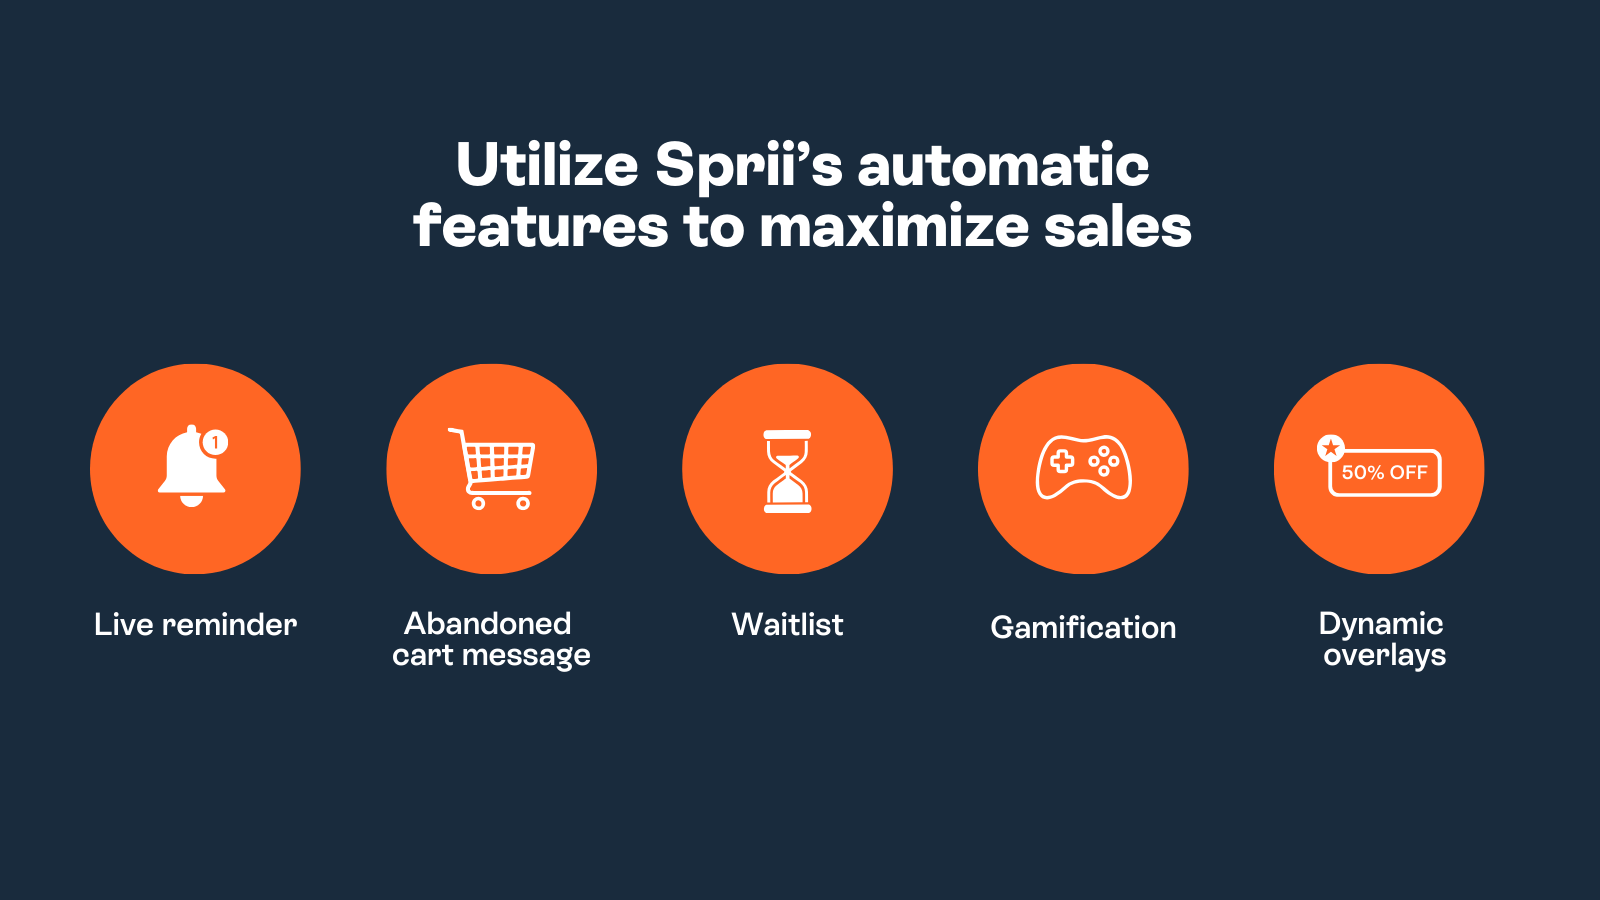 Utilize Sprii’s automatic features to maximize sales